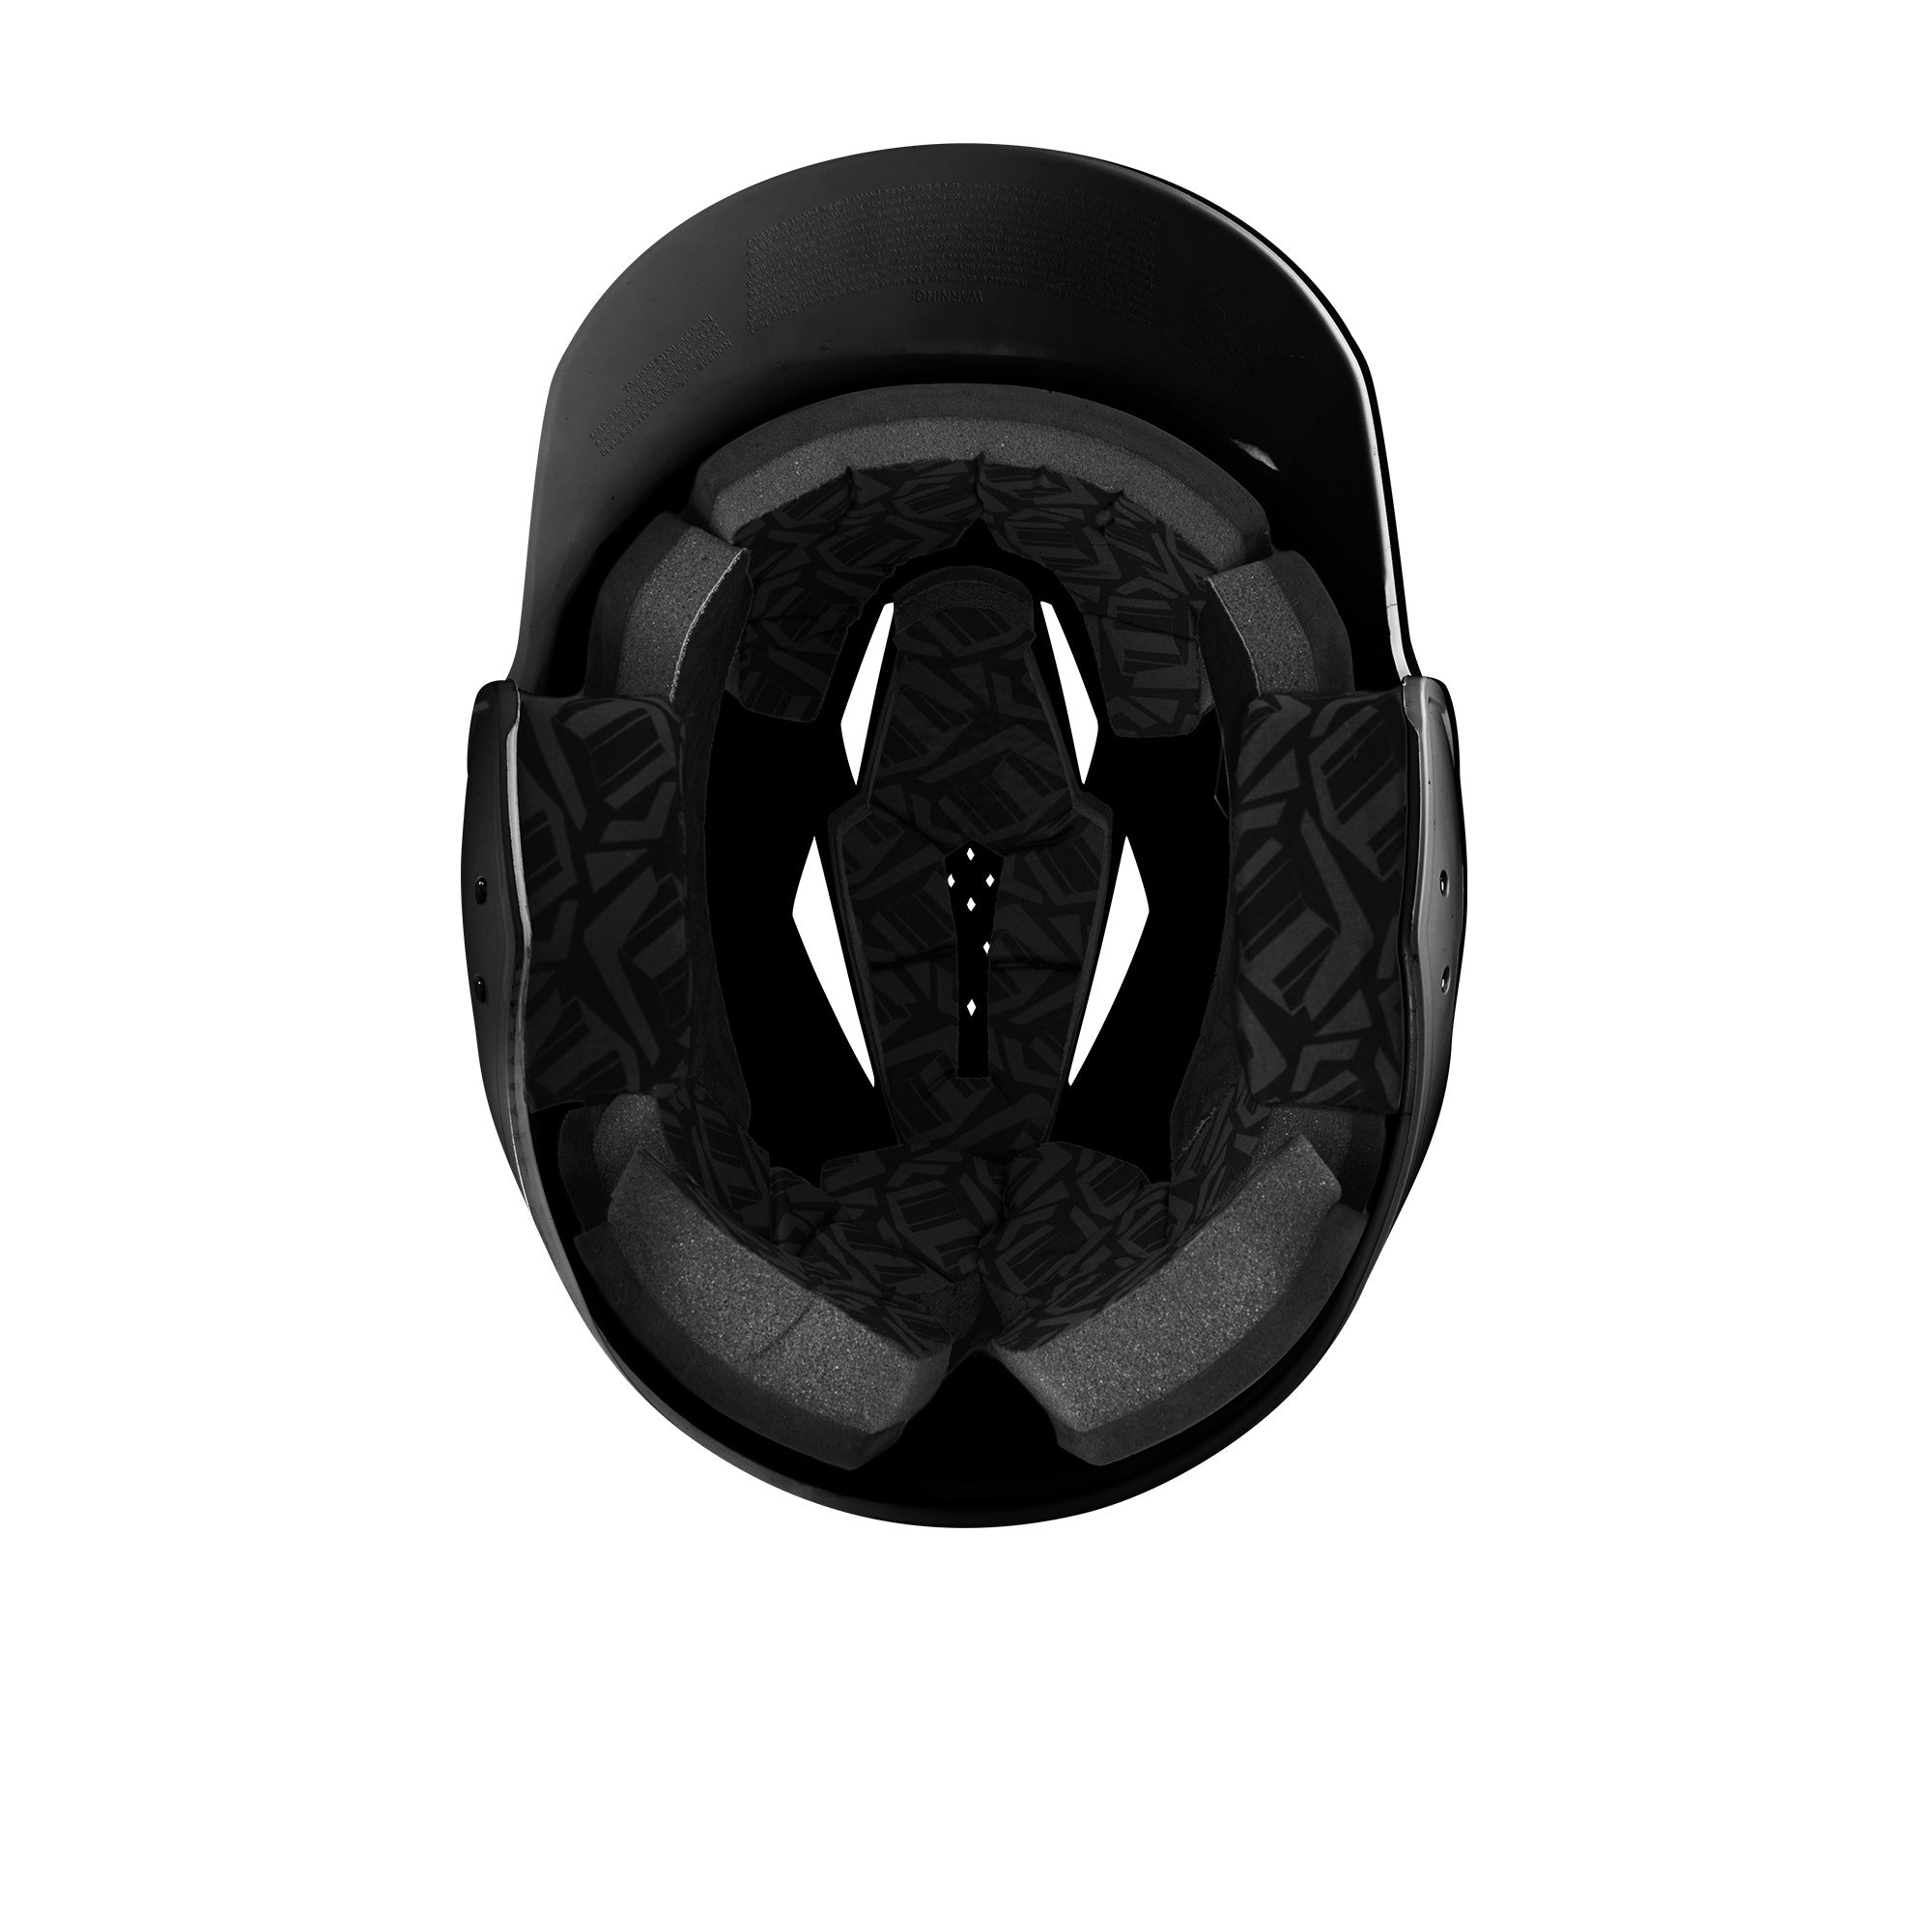 Evoshield XVT 2.0 Helmet Glossy Black